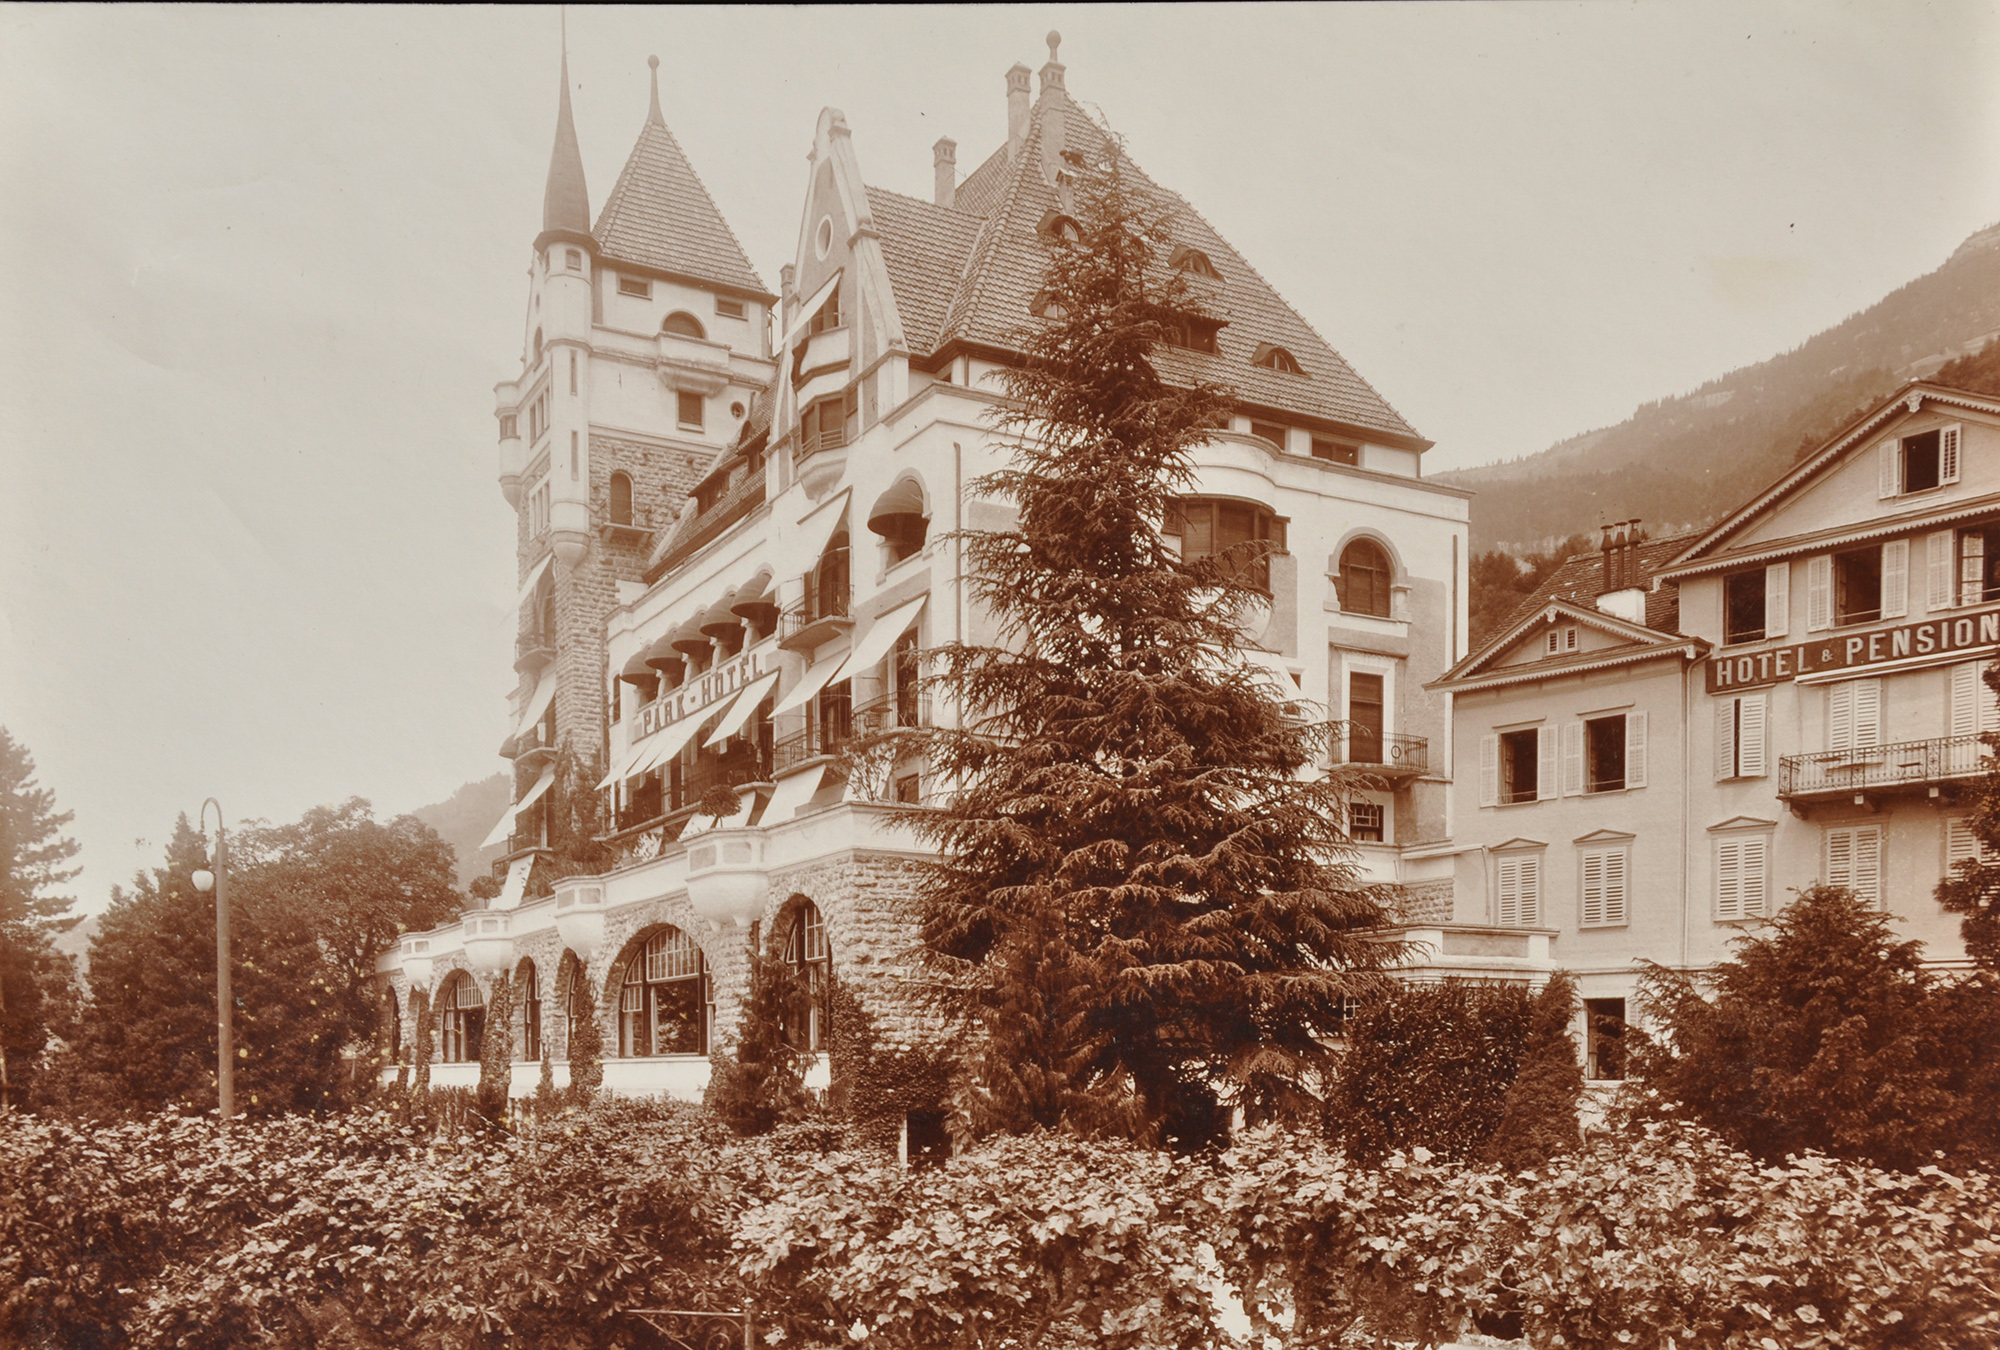 Park Hotel Vitznau historical building resembling a fairytale castle